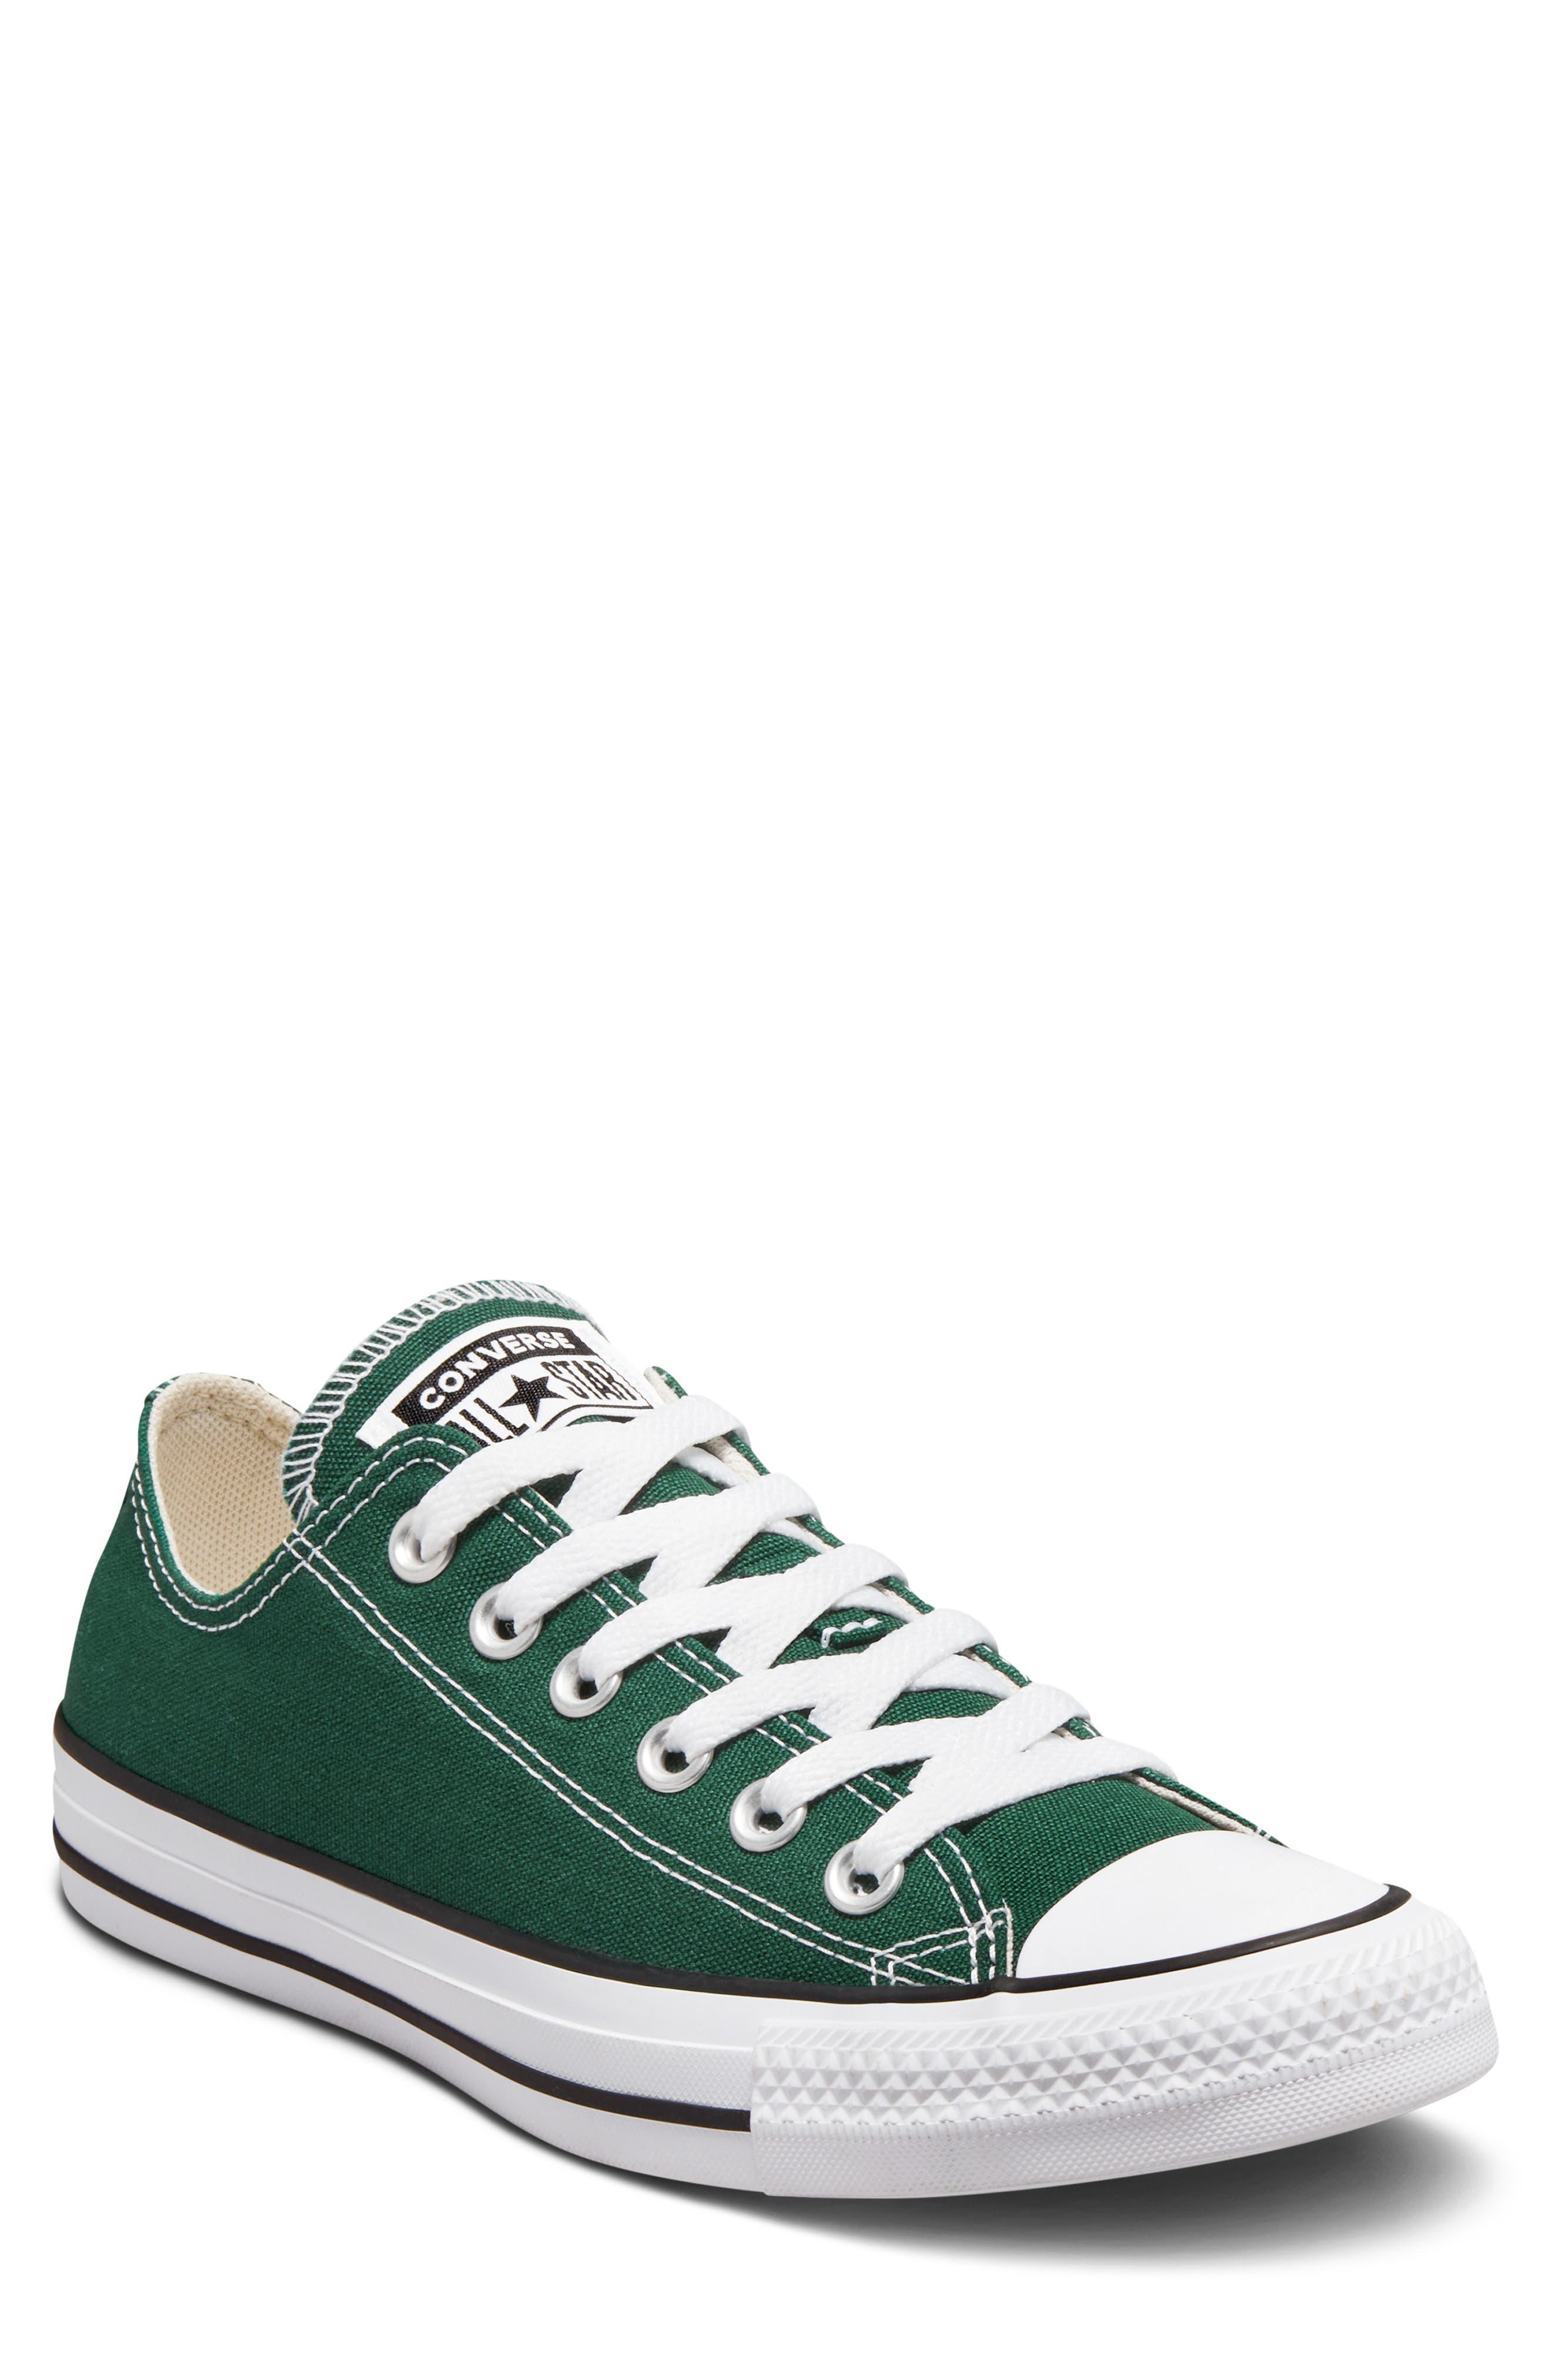 women's green converse sneakers